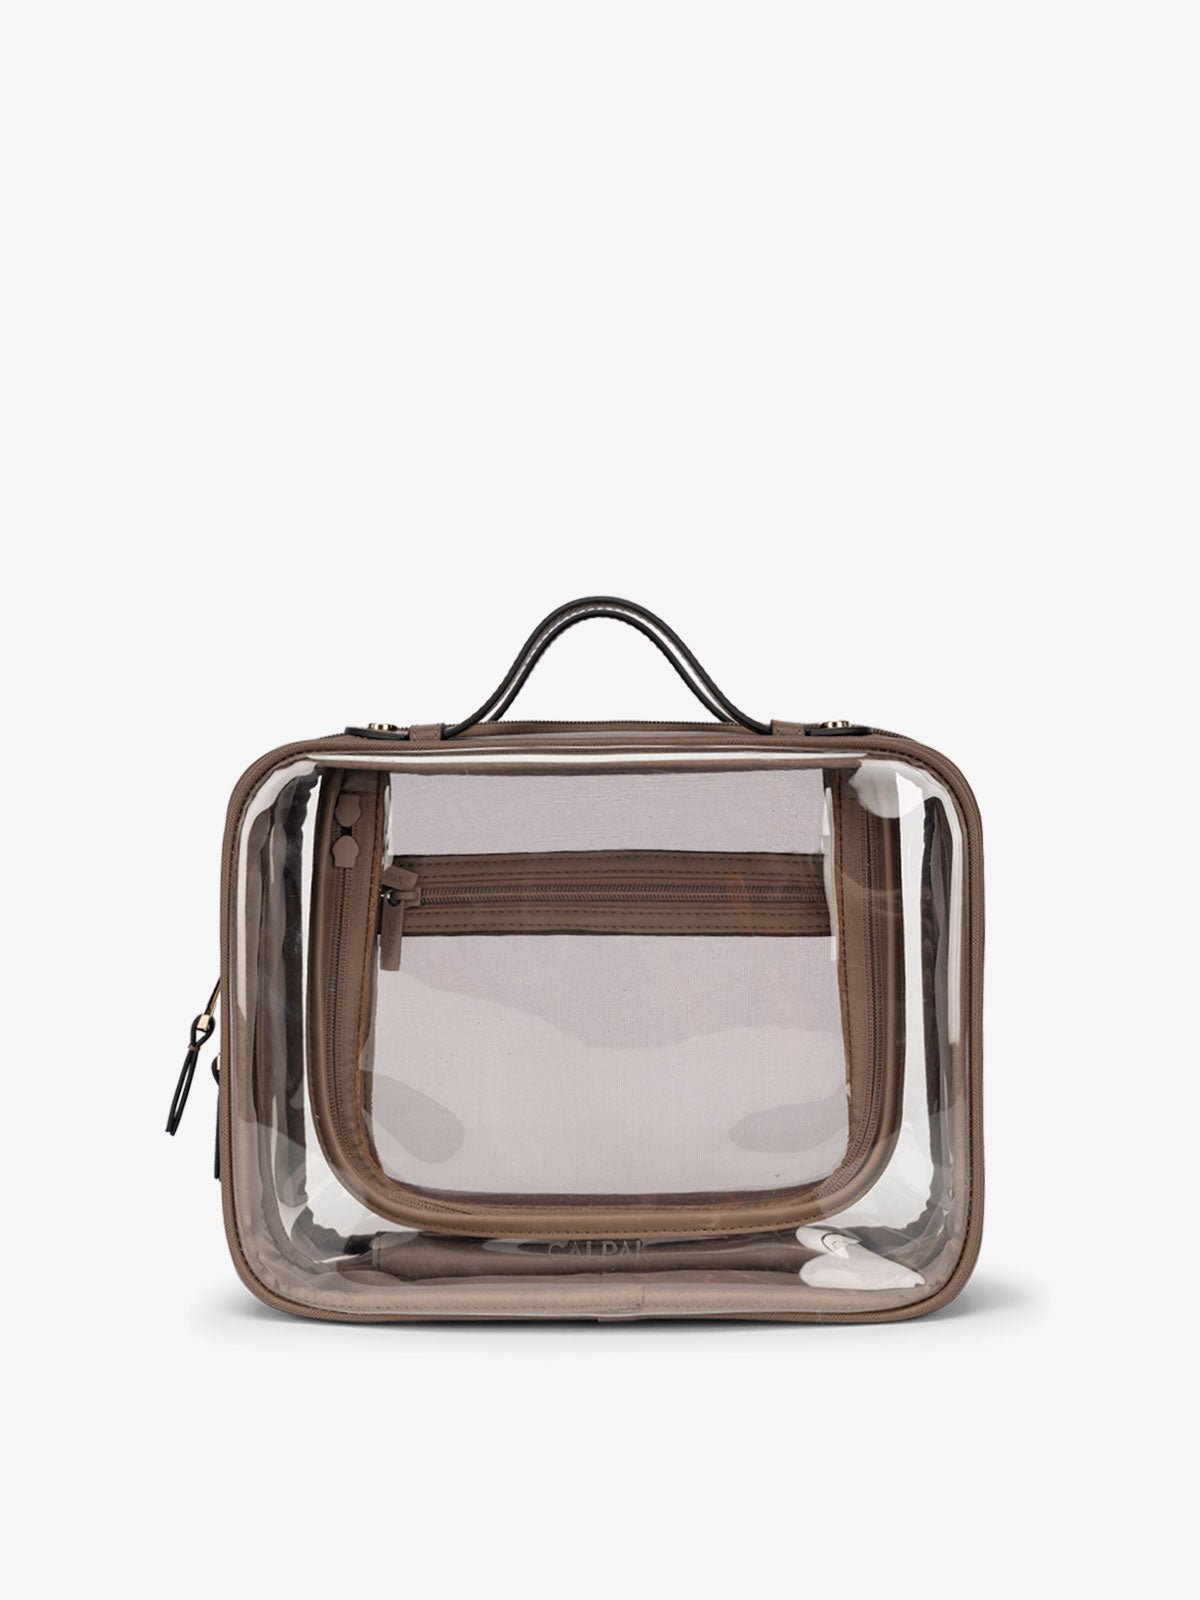 CALPAK large transparent travel cosmetics bag with handle in mocha